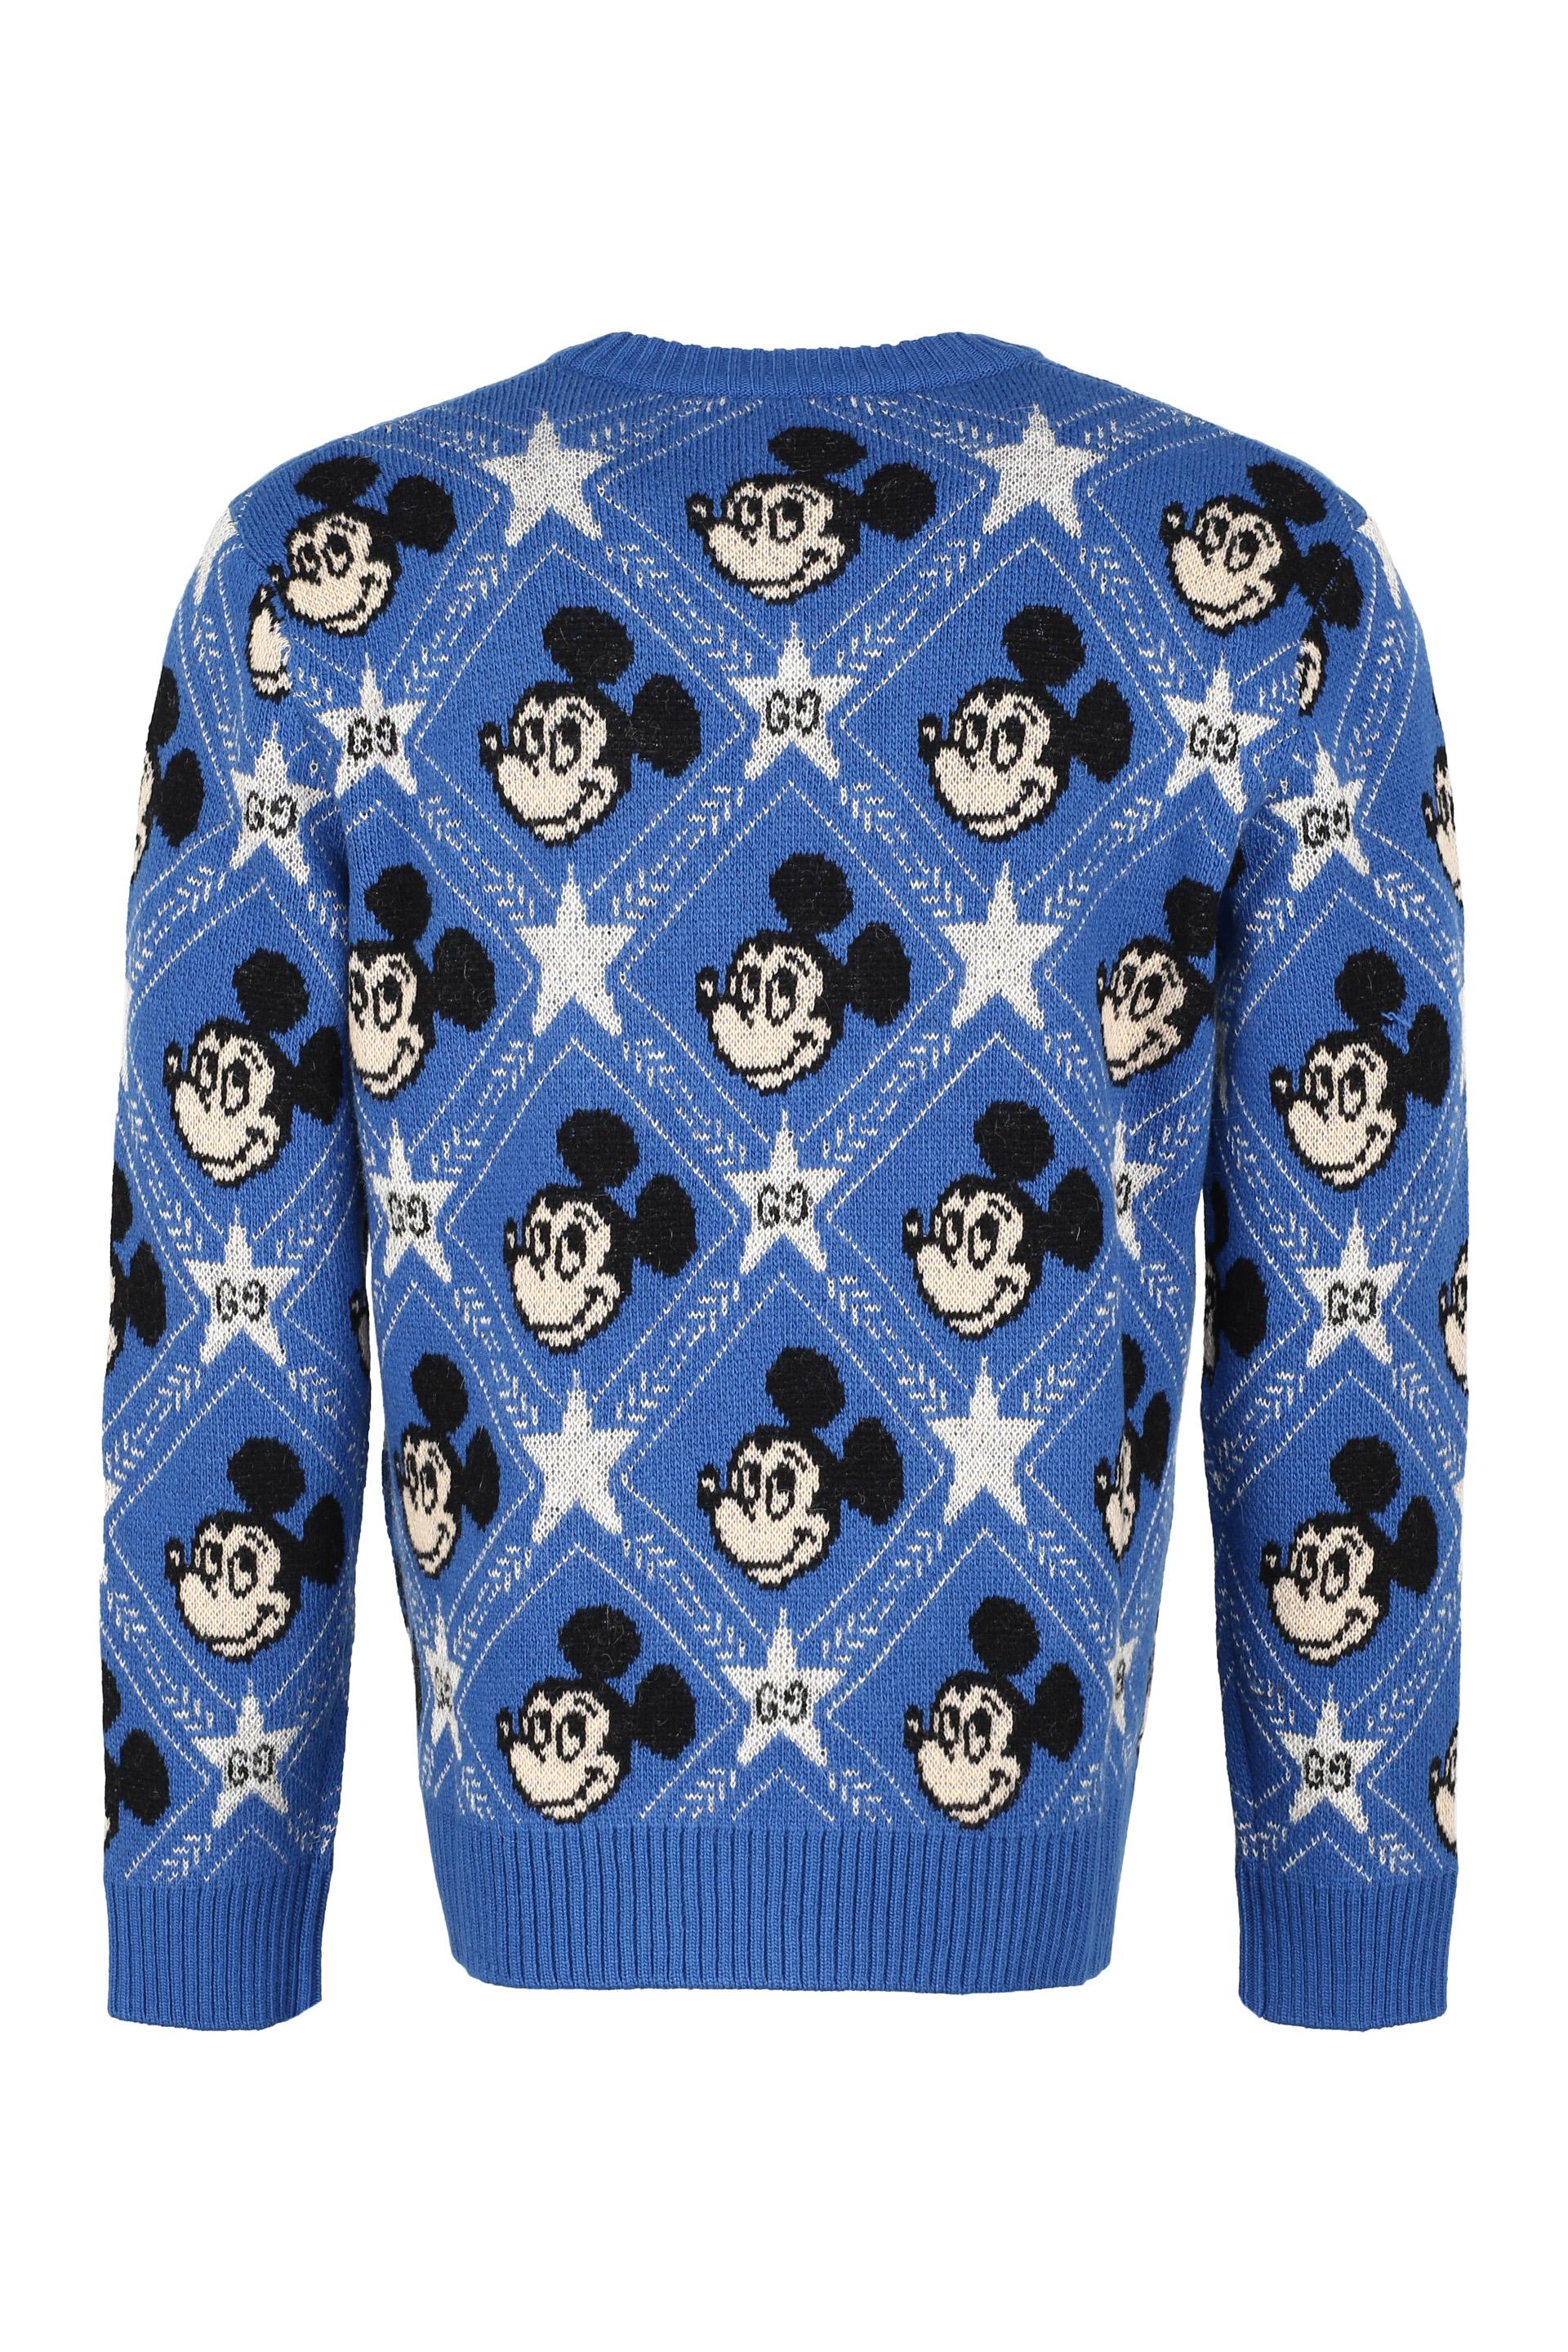 WMNS) GUCCI x Disney Co-Branded Oversized Mickey Mouse Pattern Sweate -  KICKS CREW